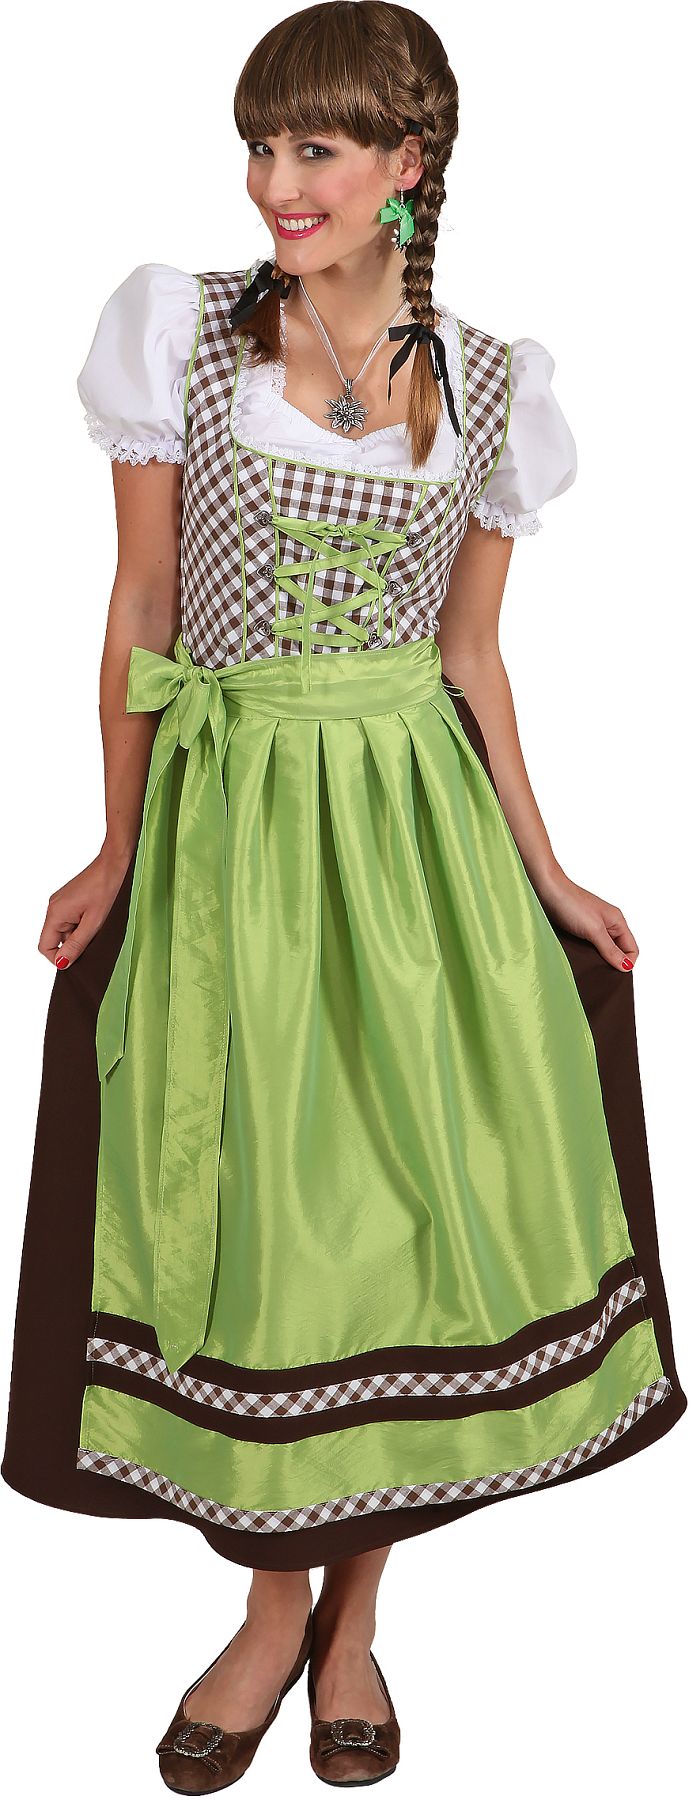 Bavarian dress ''Dirndl'', brown-green